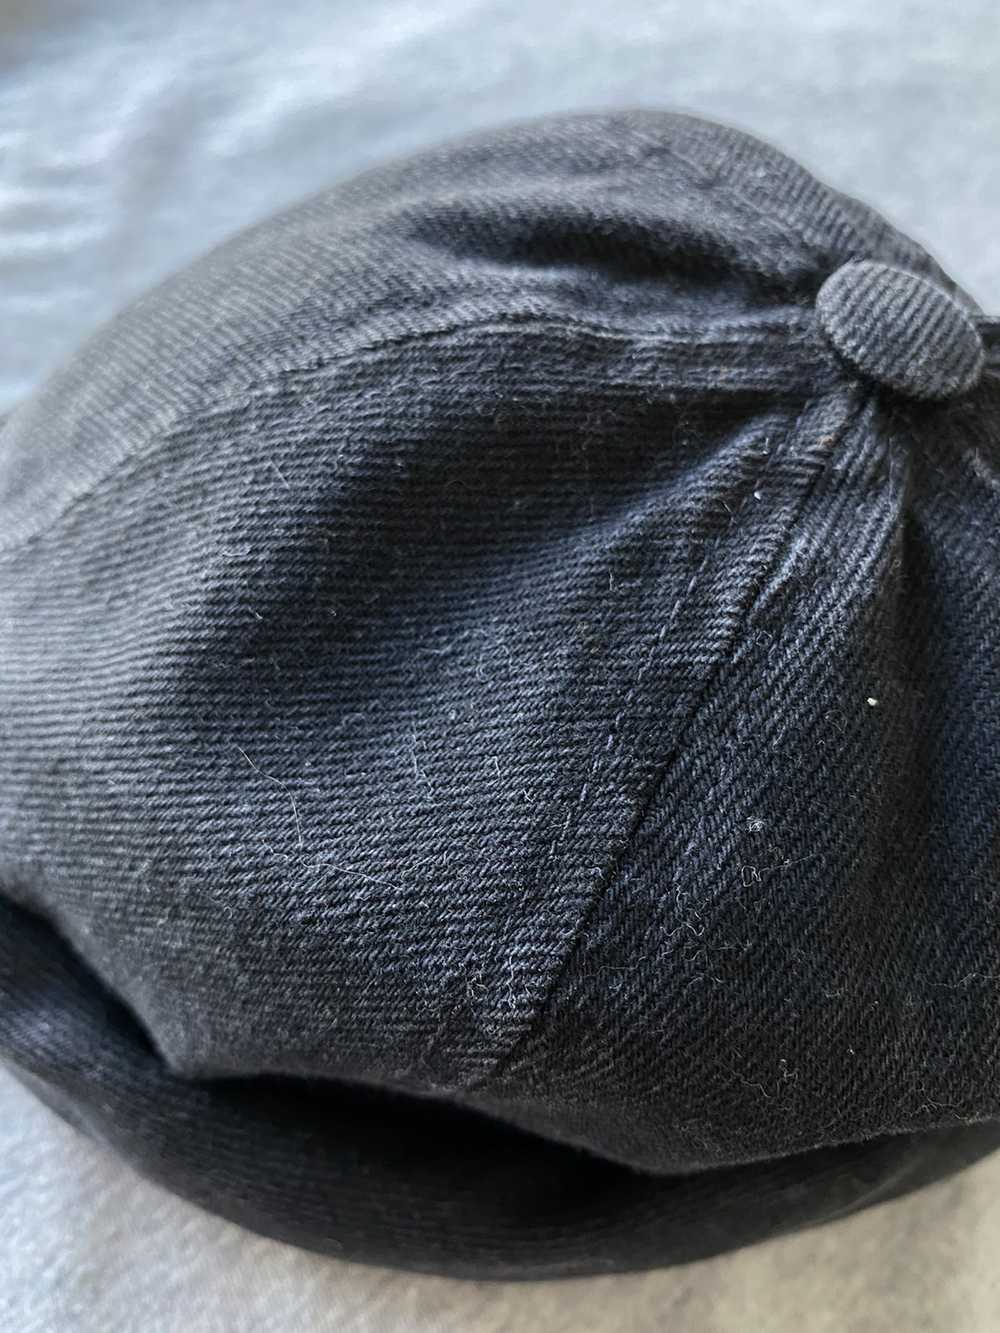 Beton Cire Black washed denim hat - image 8